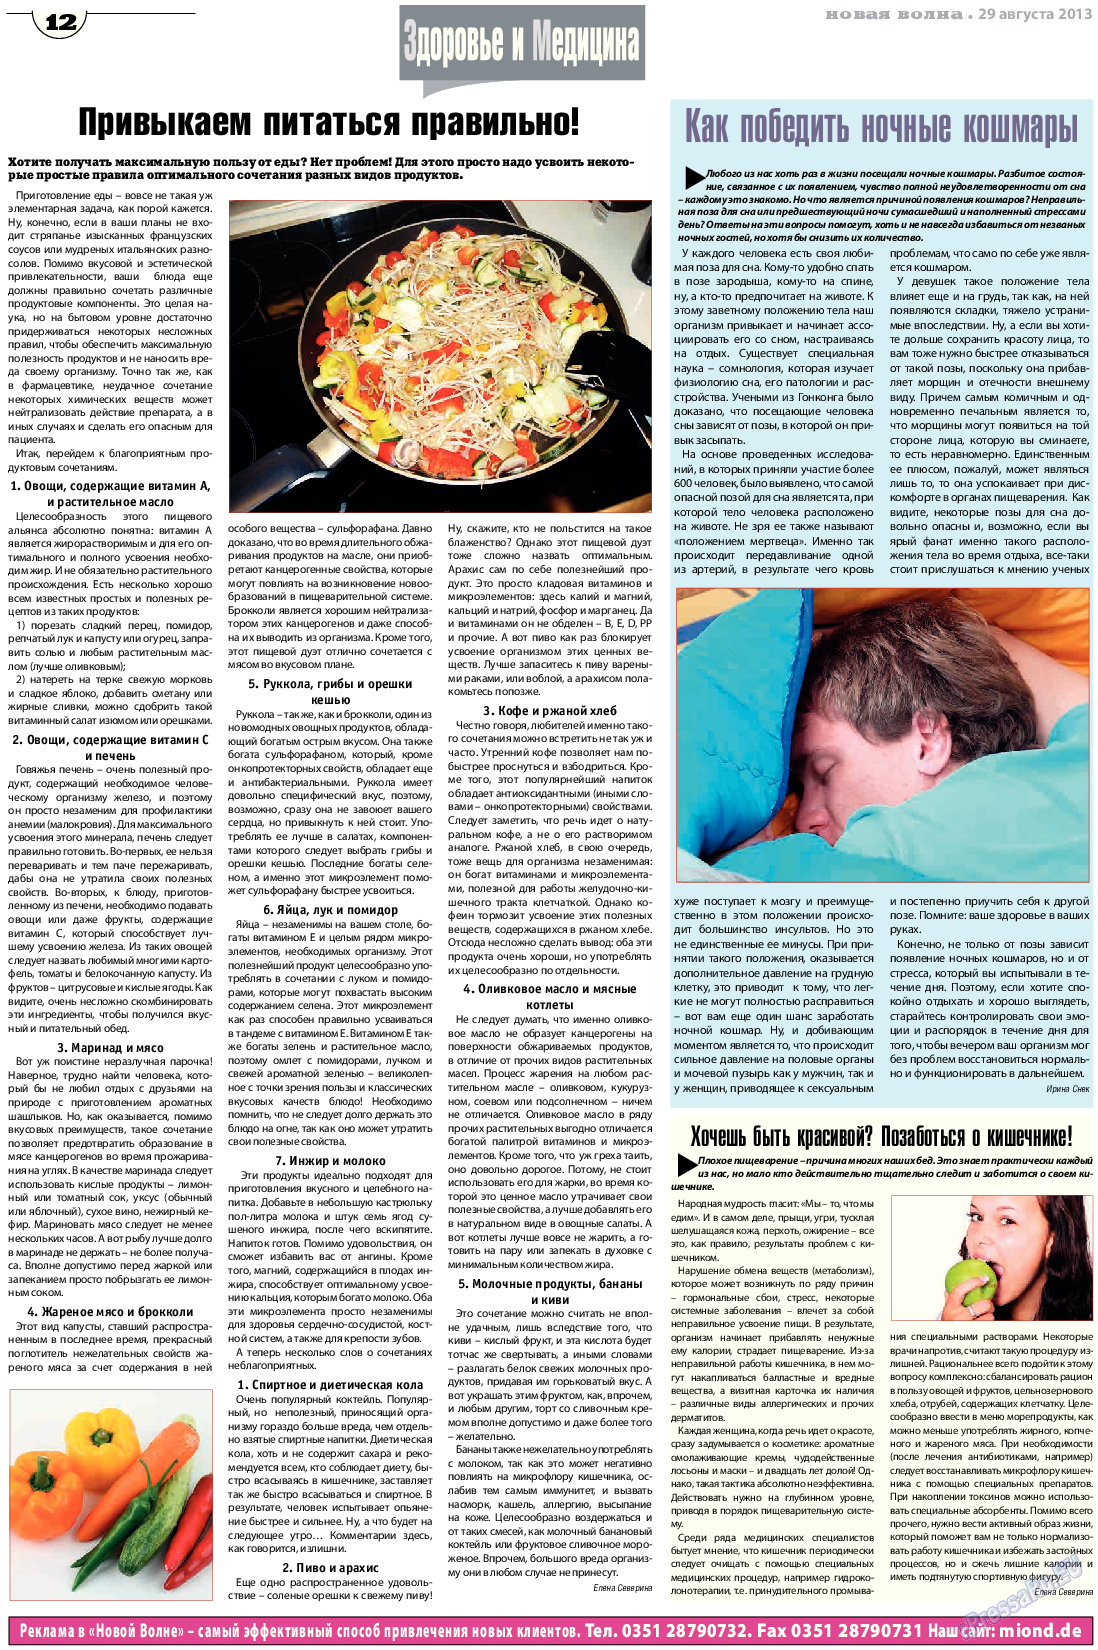 Новая Wолна, газета. 2013 №35 стр.12